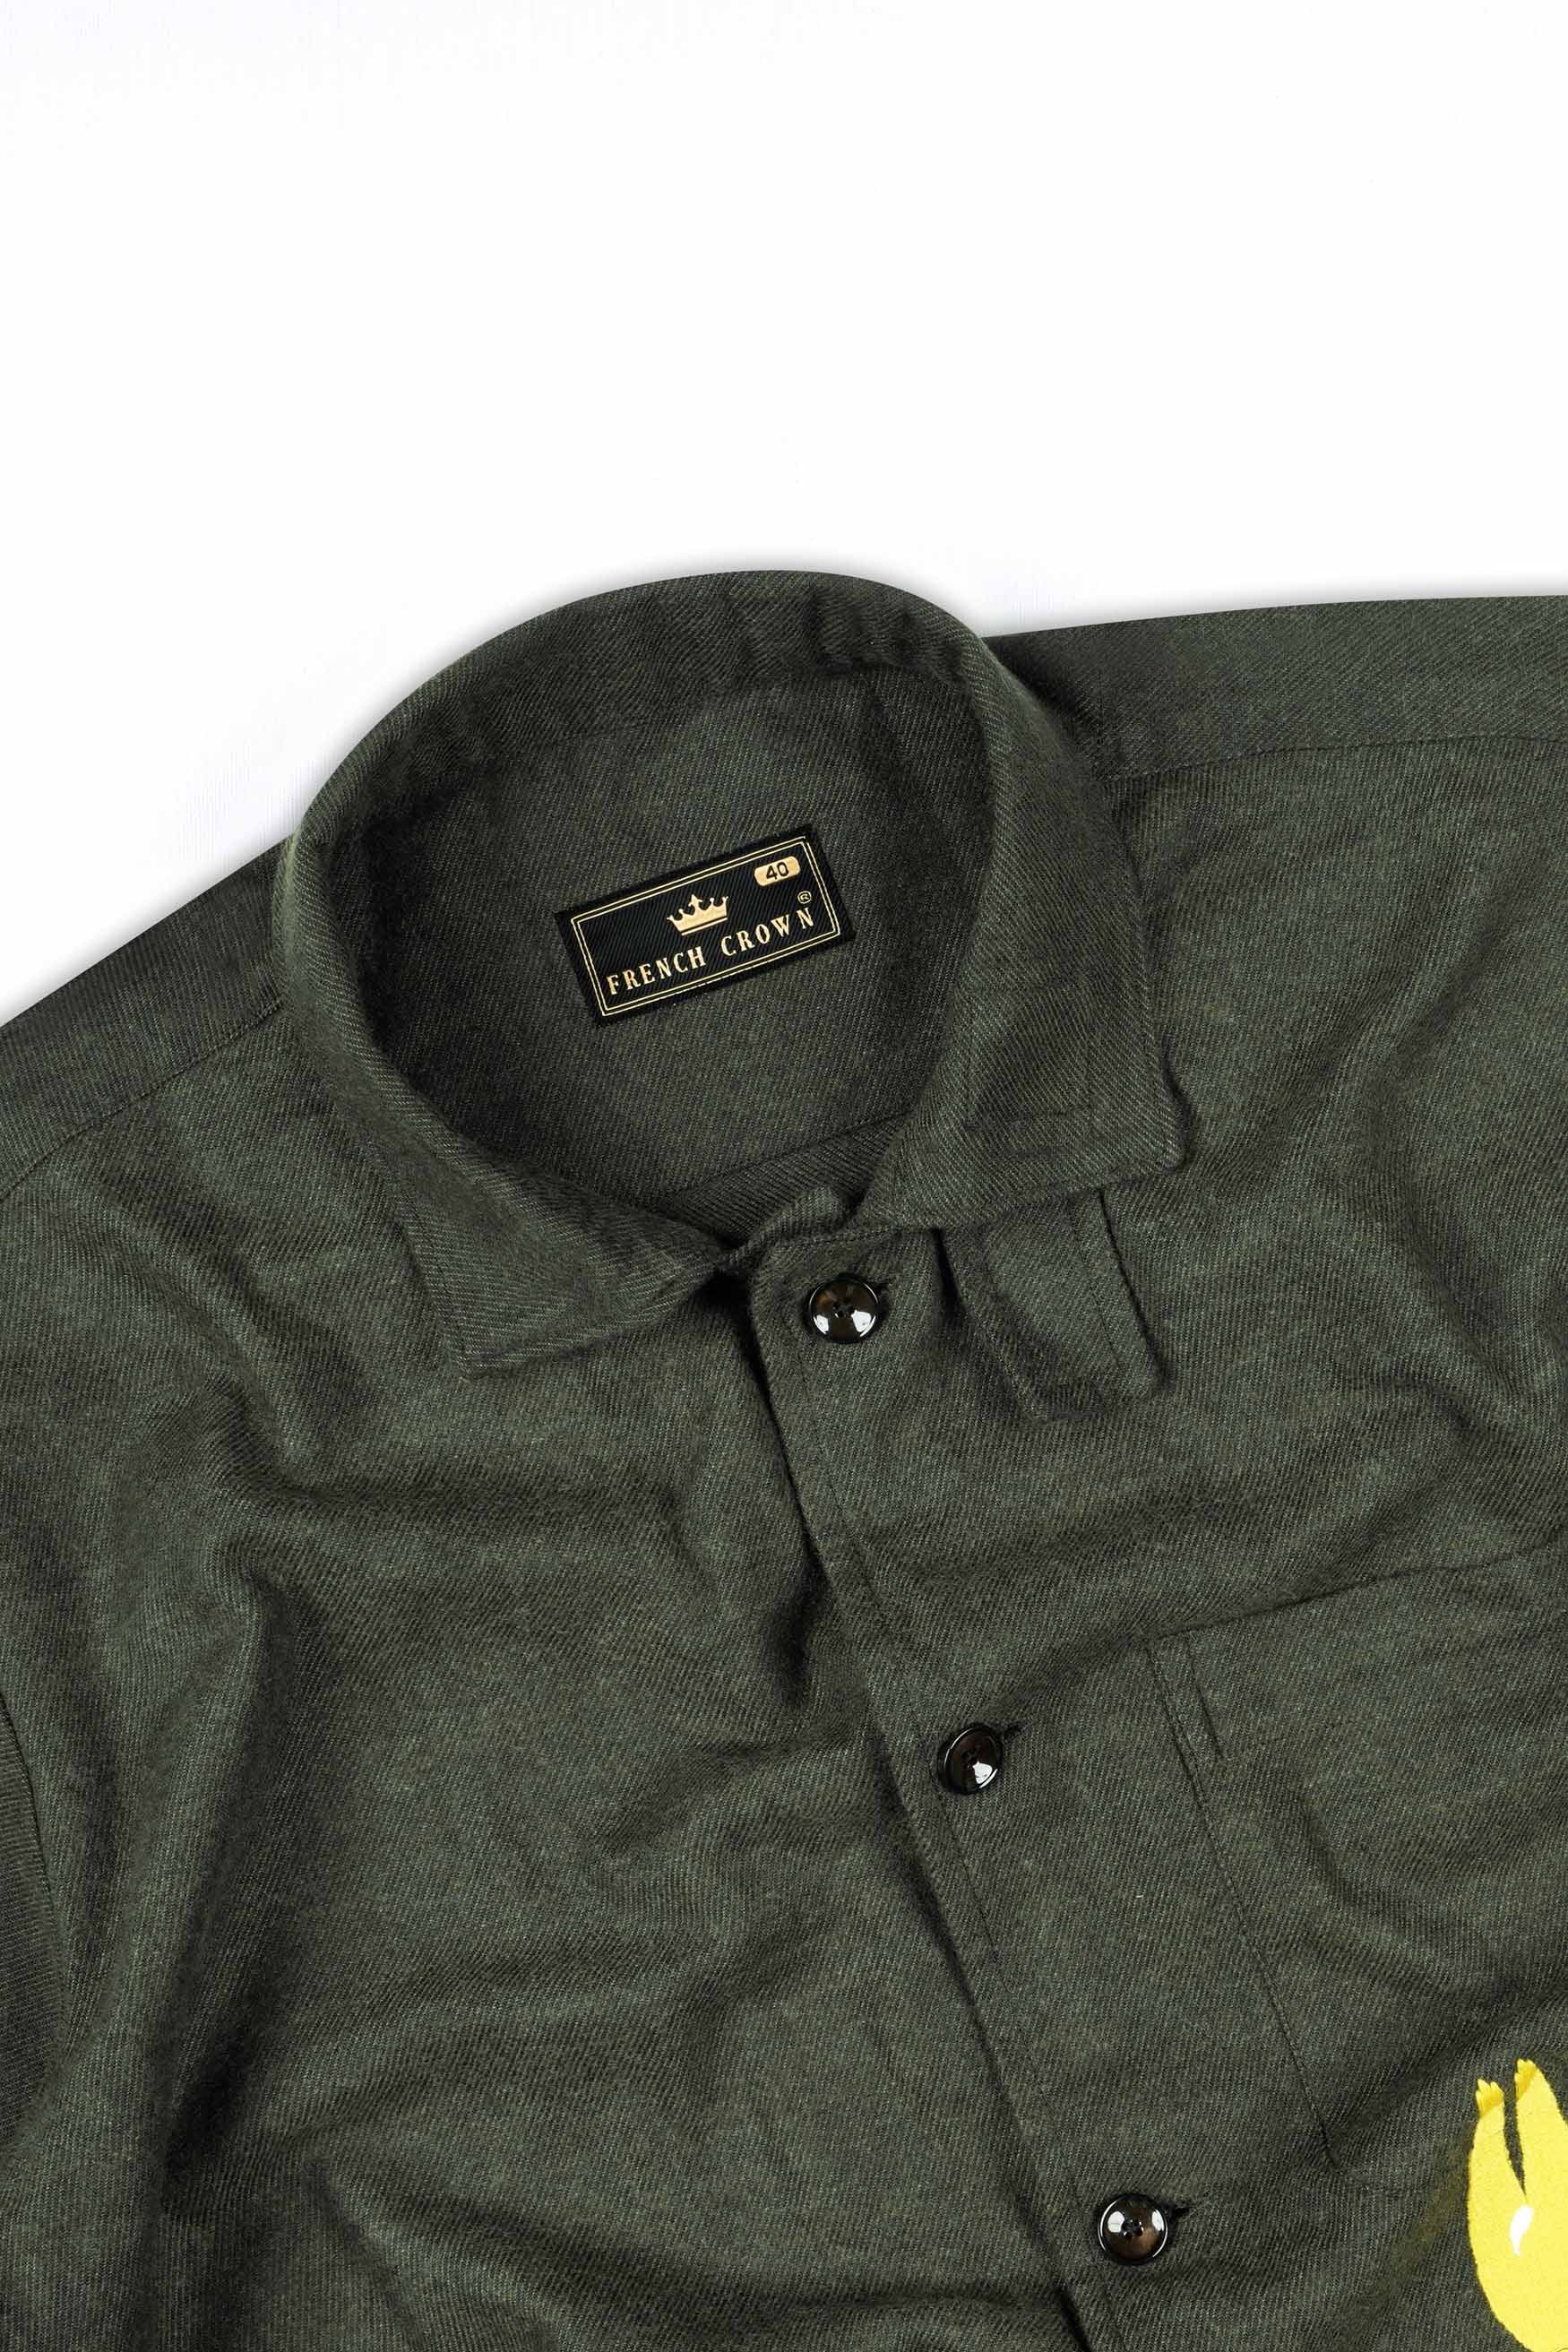 Kombu Green Embroidered Flannel Designer Overshirt